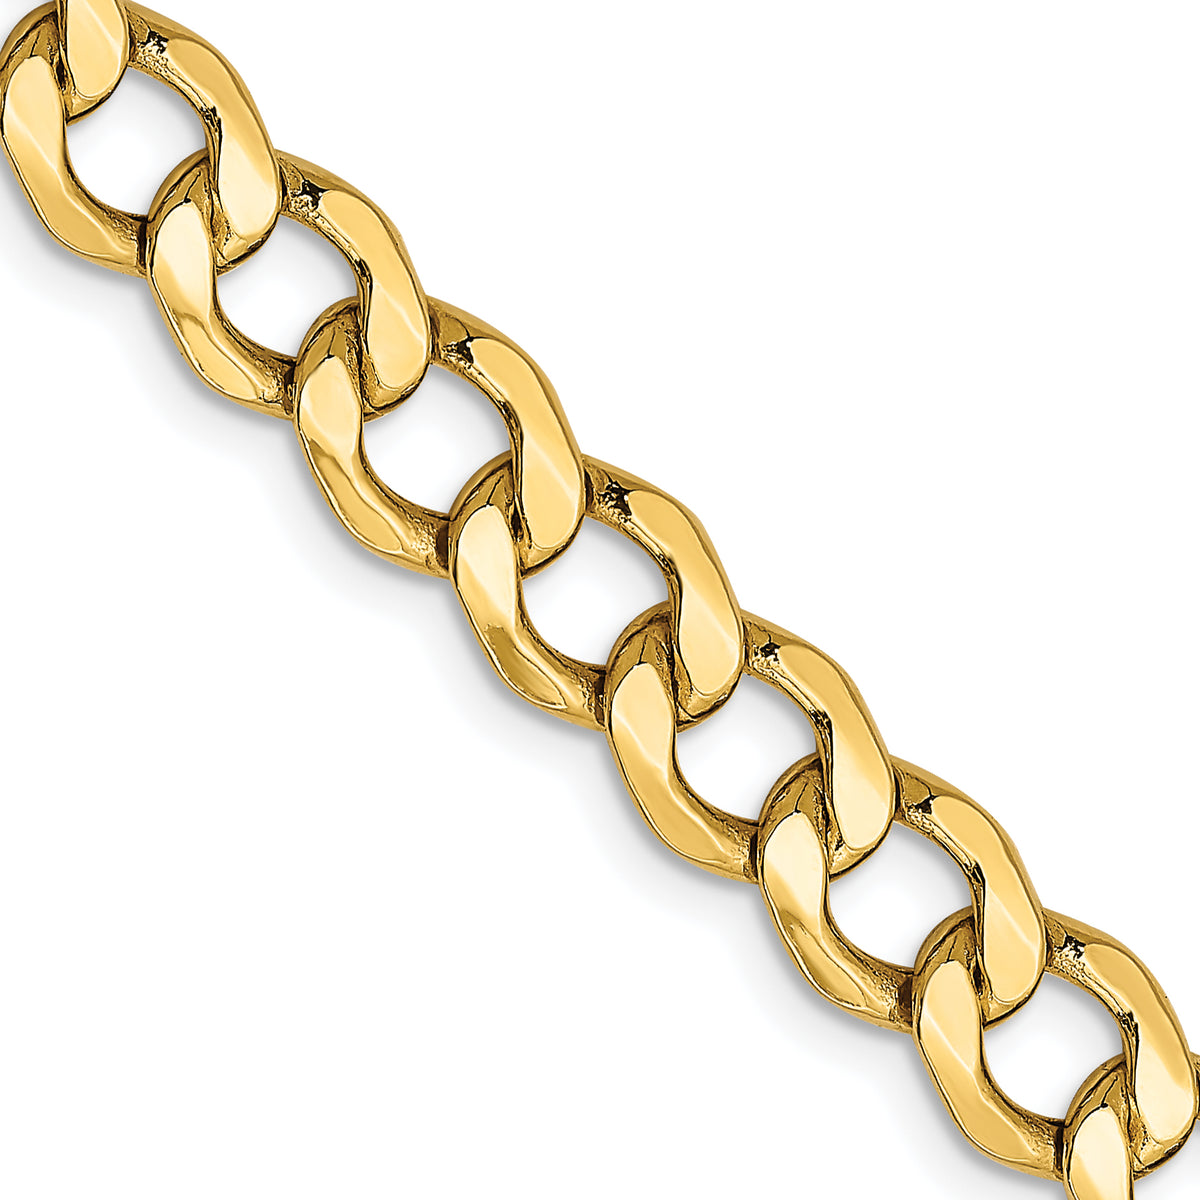 10k 7mm Semi-Solid Curb Link Chain